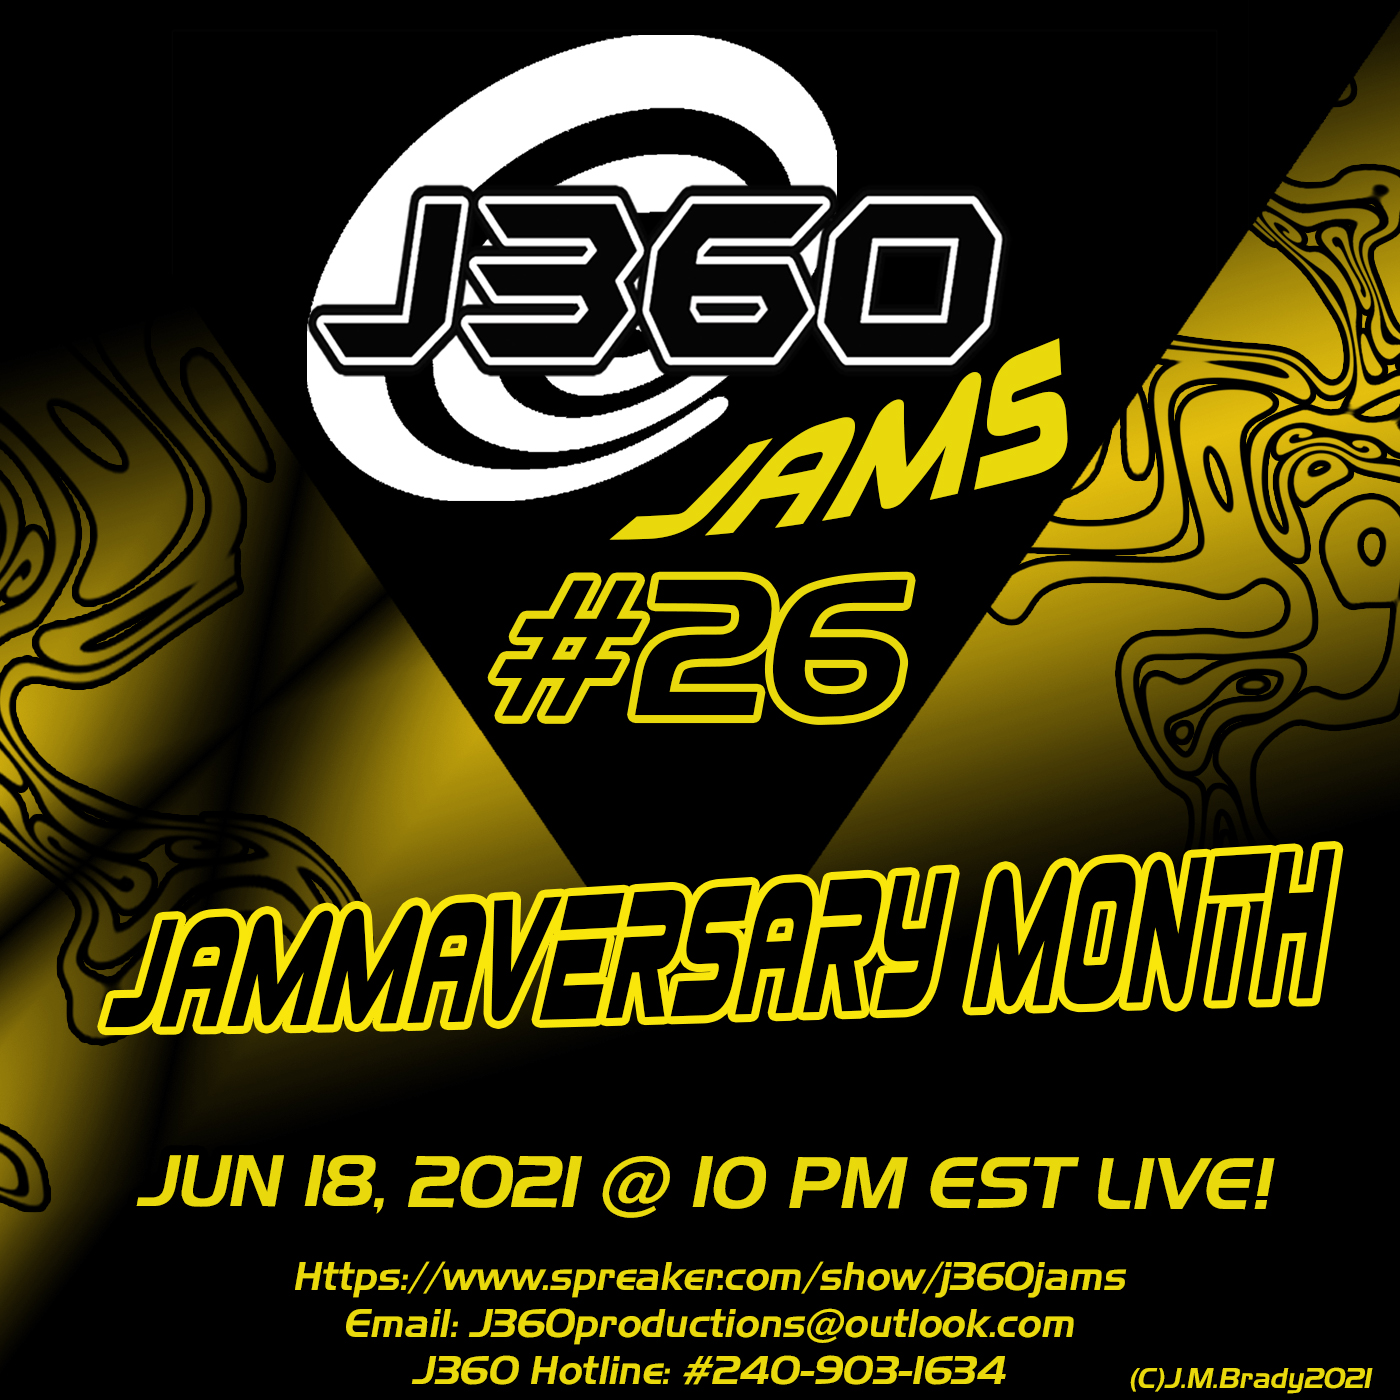 J360 Jams#26: Jammaversary Megamix